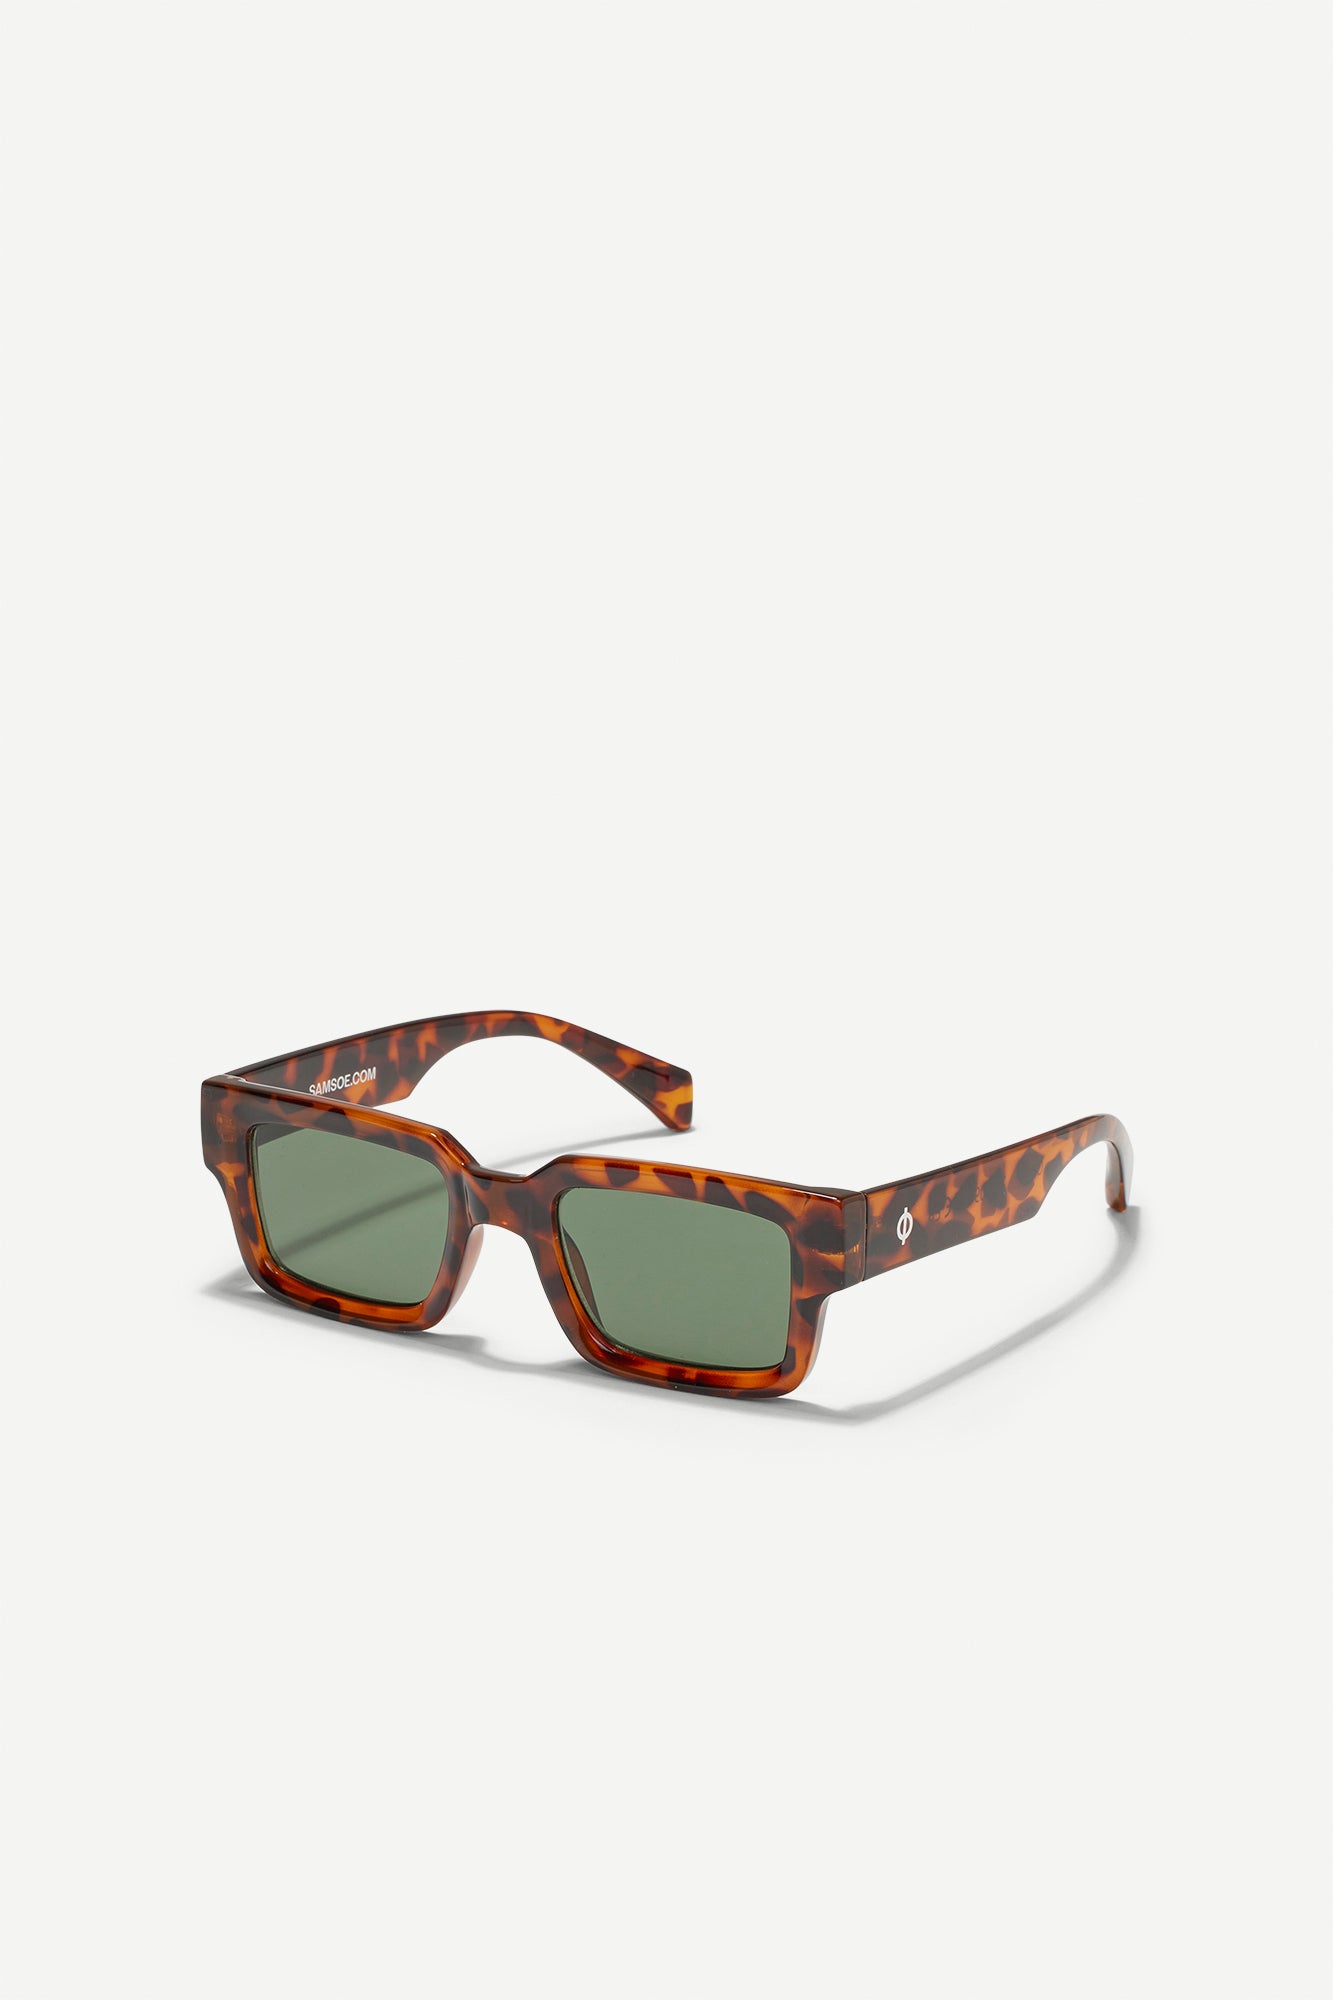 sunglasses Sajessie tortoise green